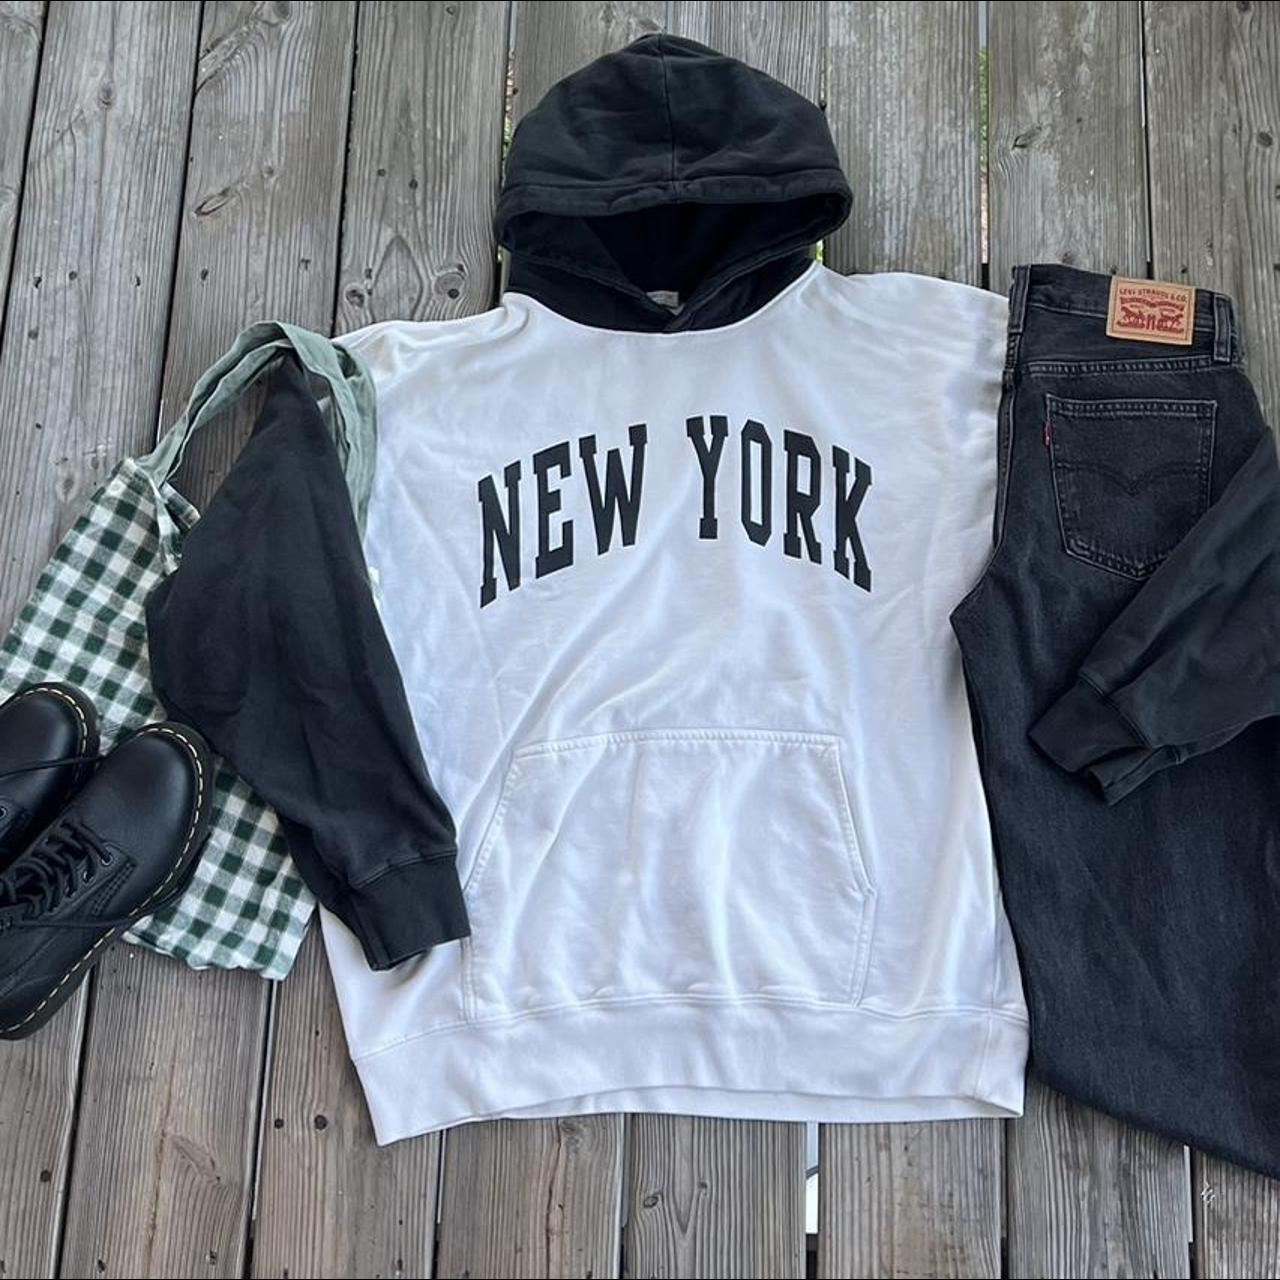 John galt New York hoodie 🚕 size one size fits all - Depop